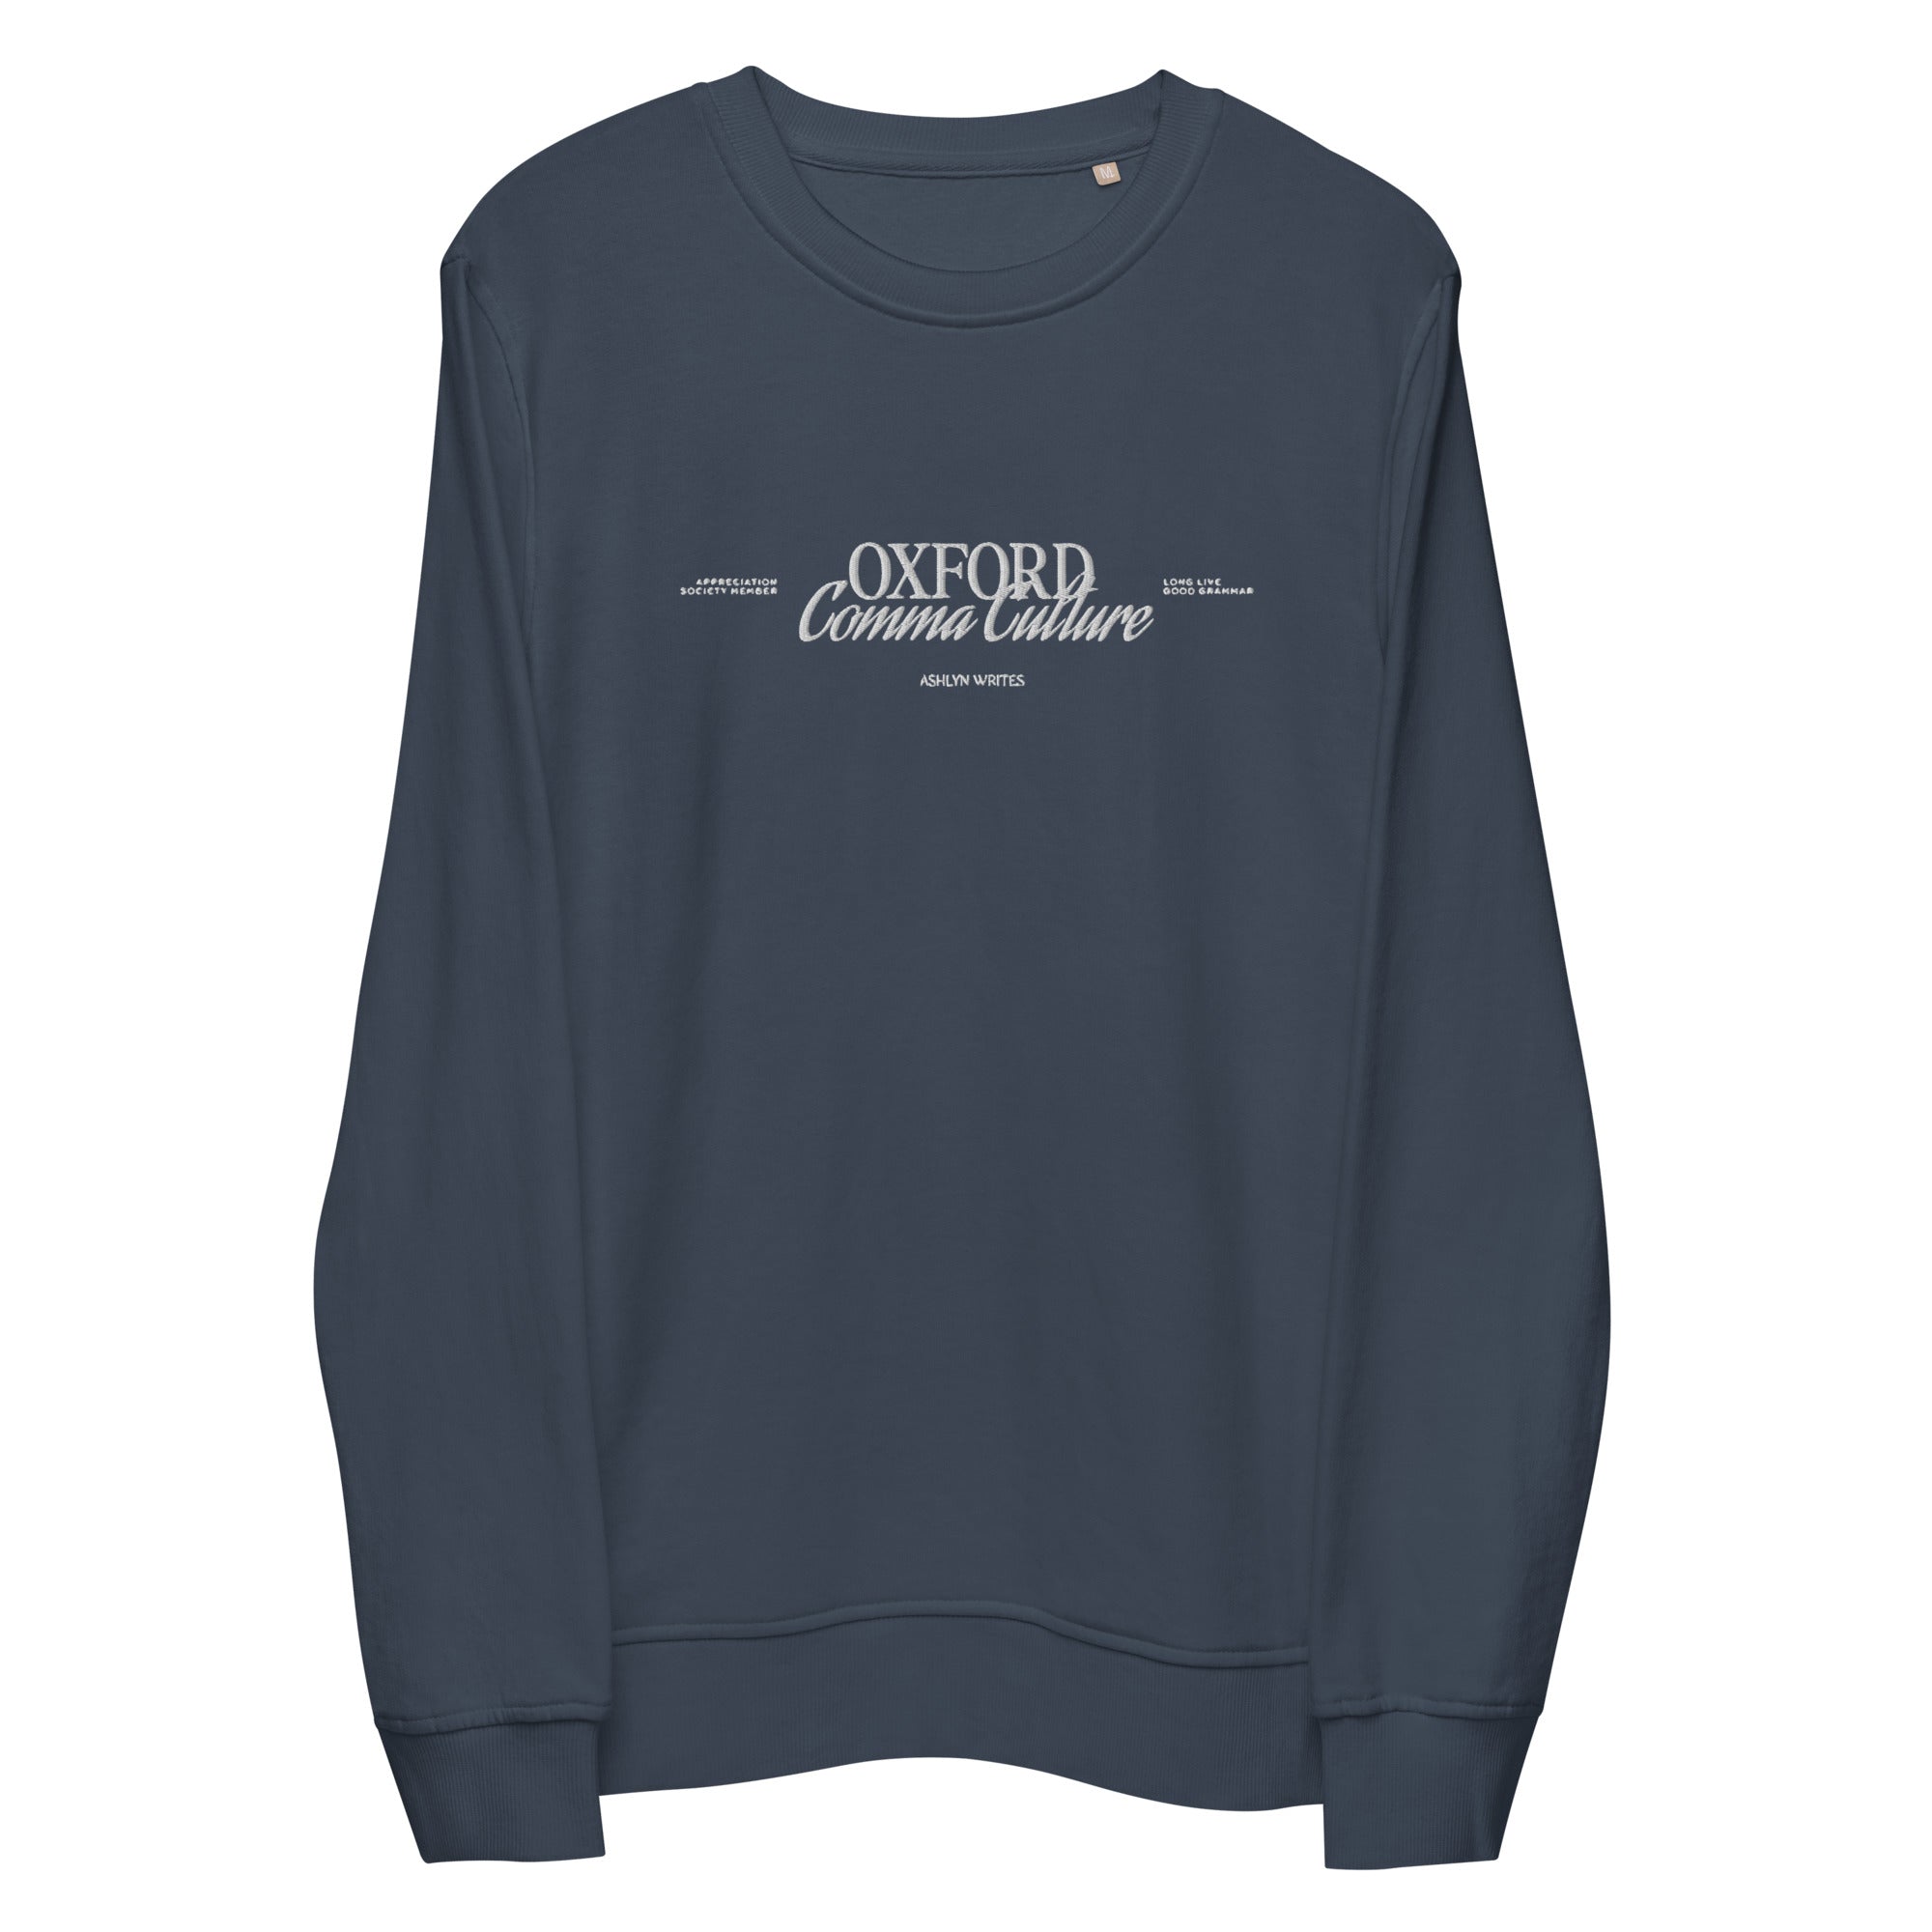 Oxford Comma Culture Sweatshirt